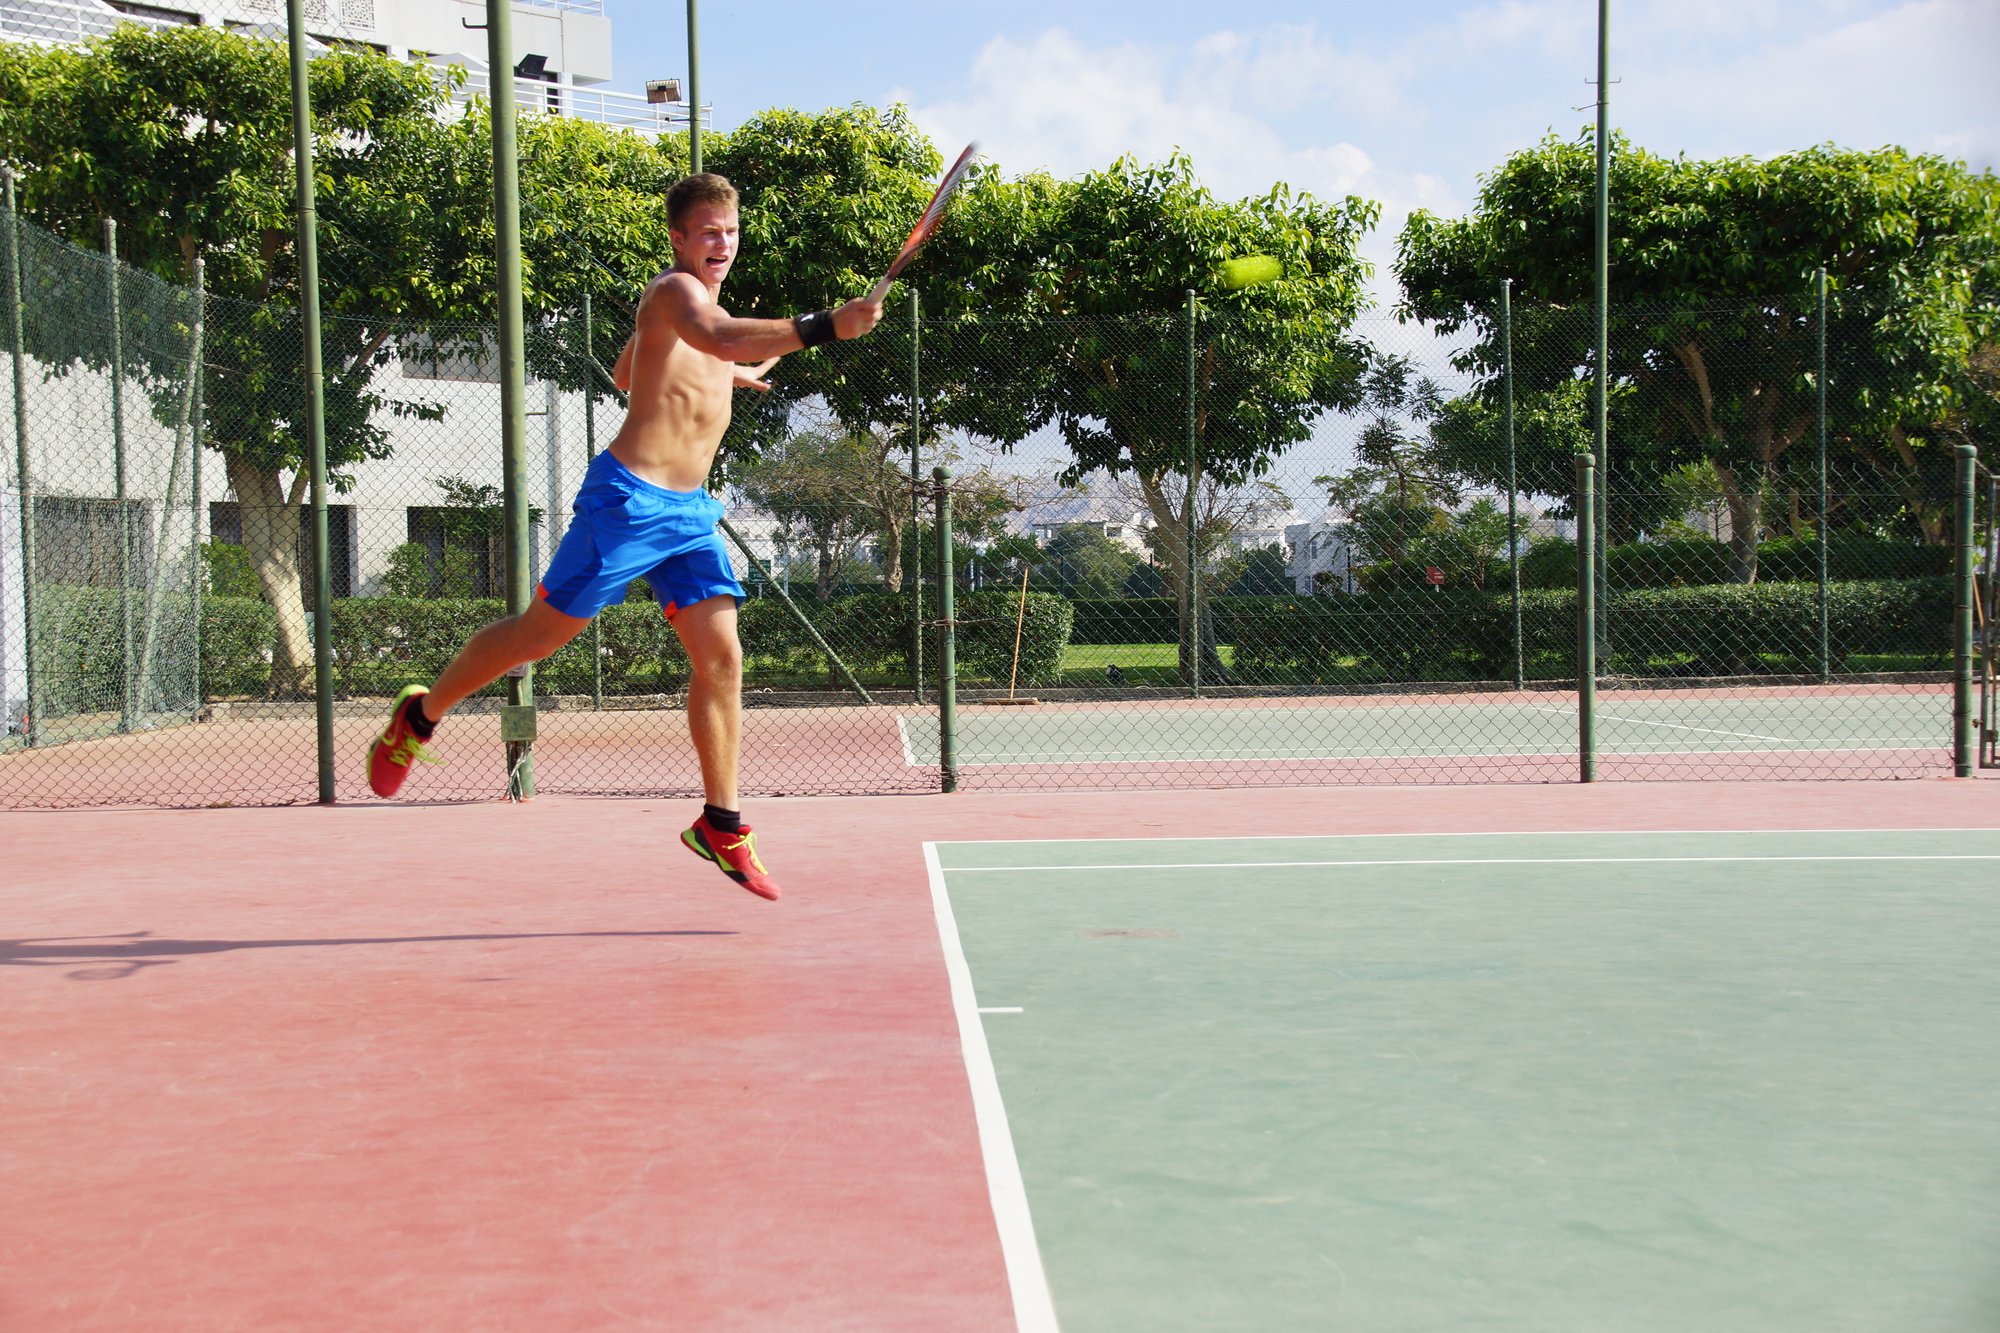 Patrick S. teaches tennis lessons in Davie, FL